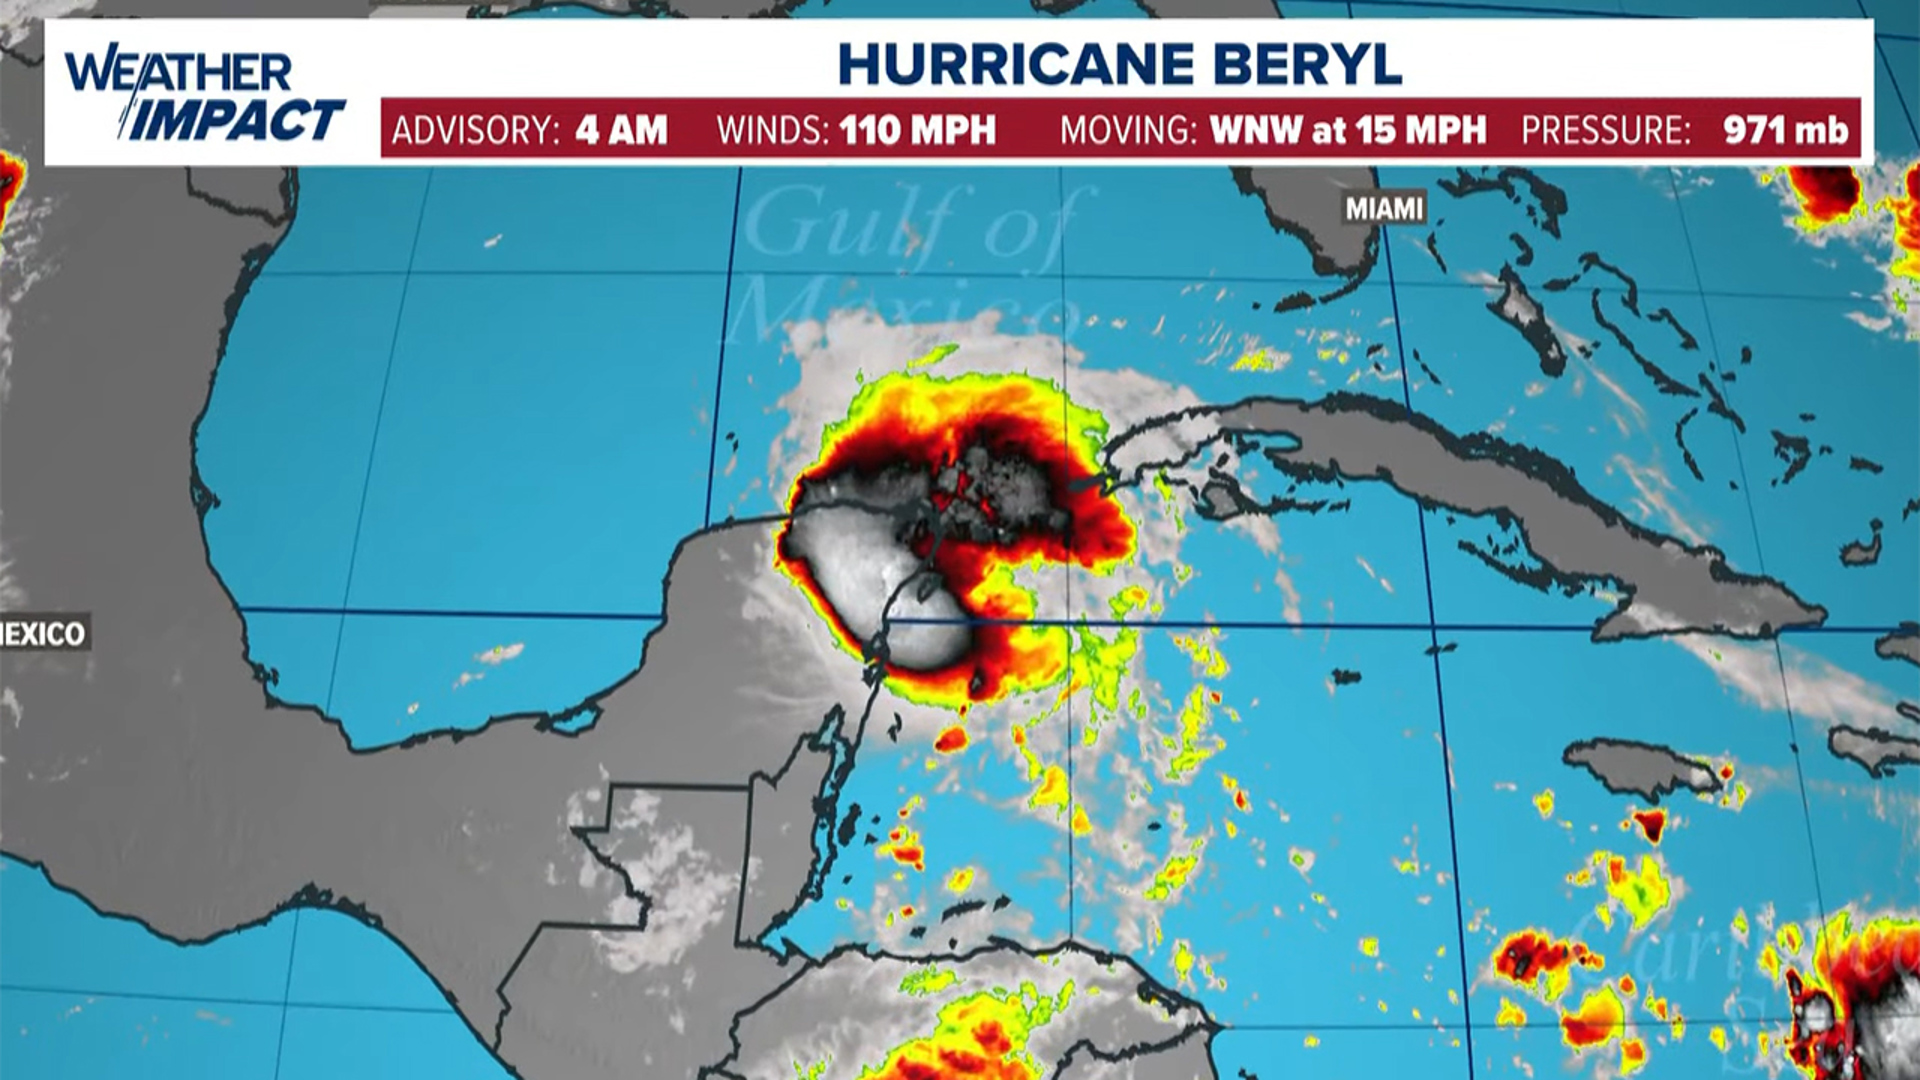 After indirectly hitting Jamaica, Hurricane Beryl is continuing on its track toward the Yucatán Peninsula. Track Hurricane Beryl live.